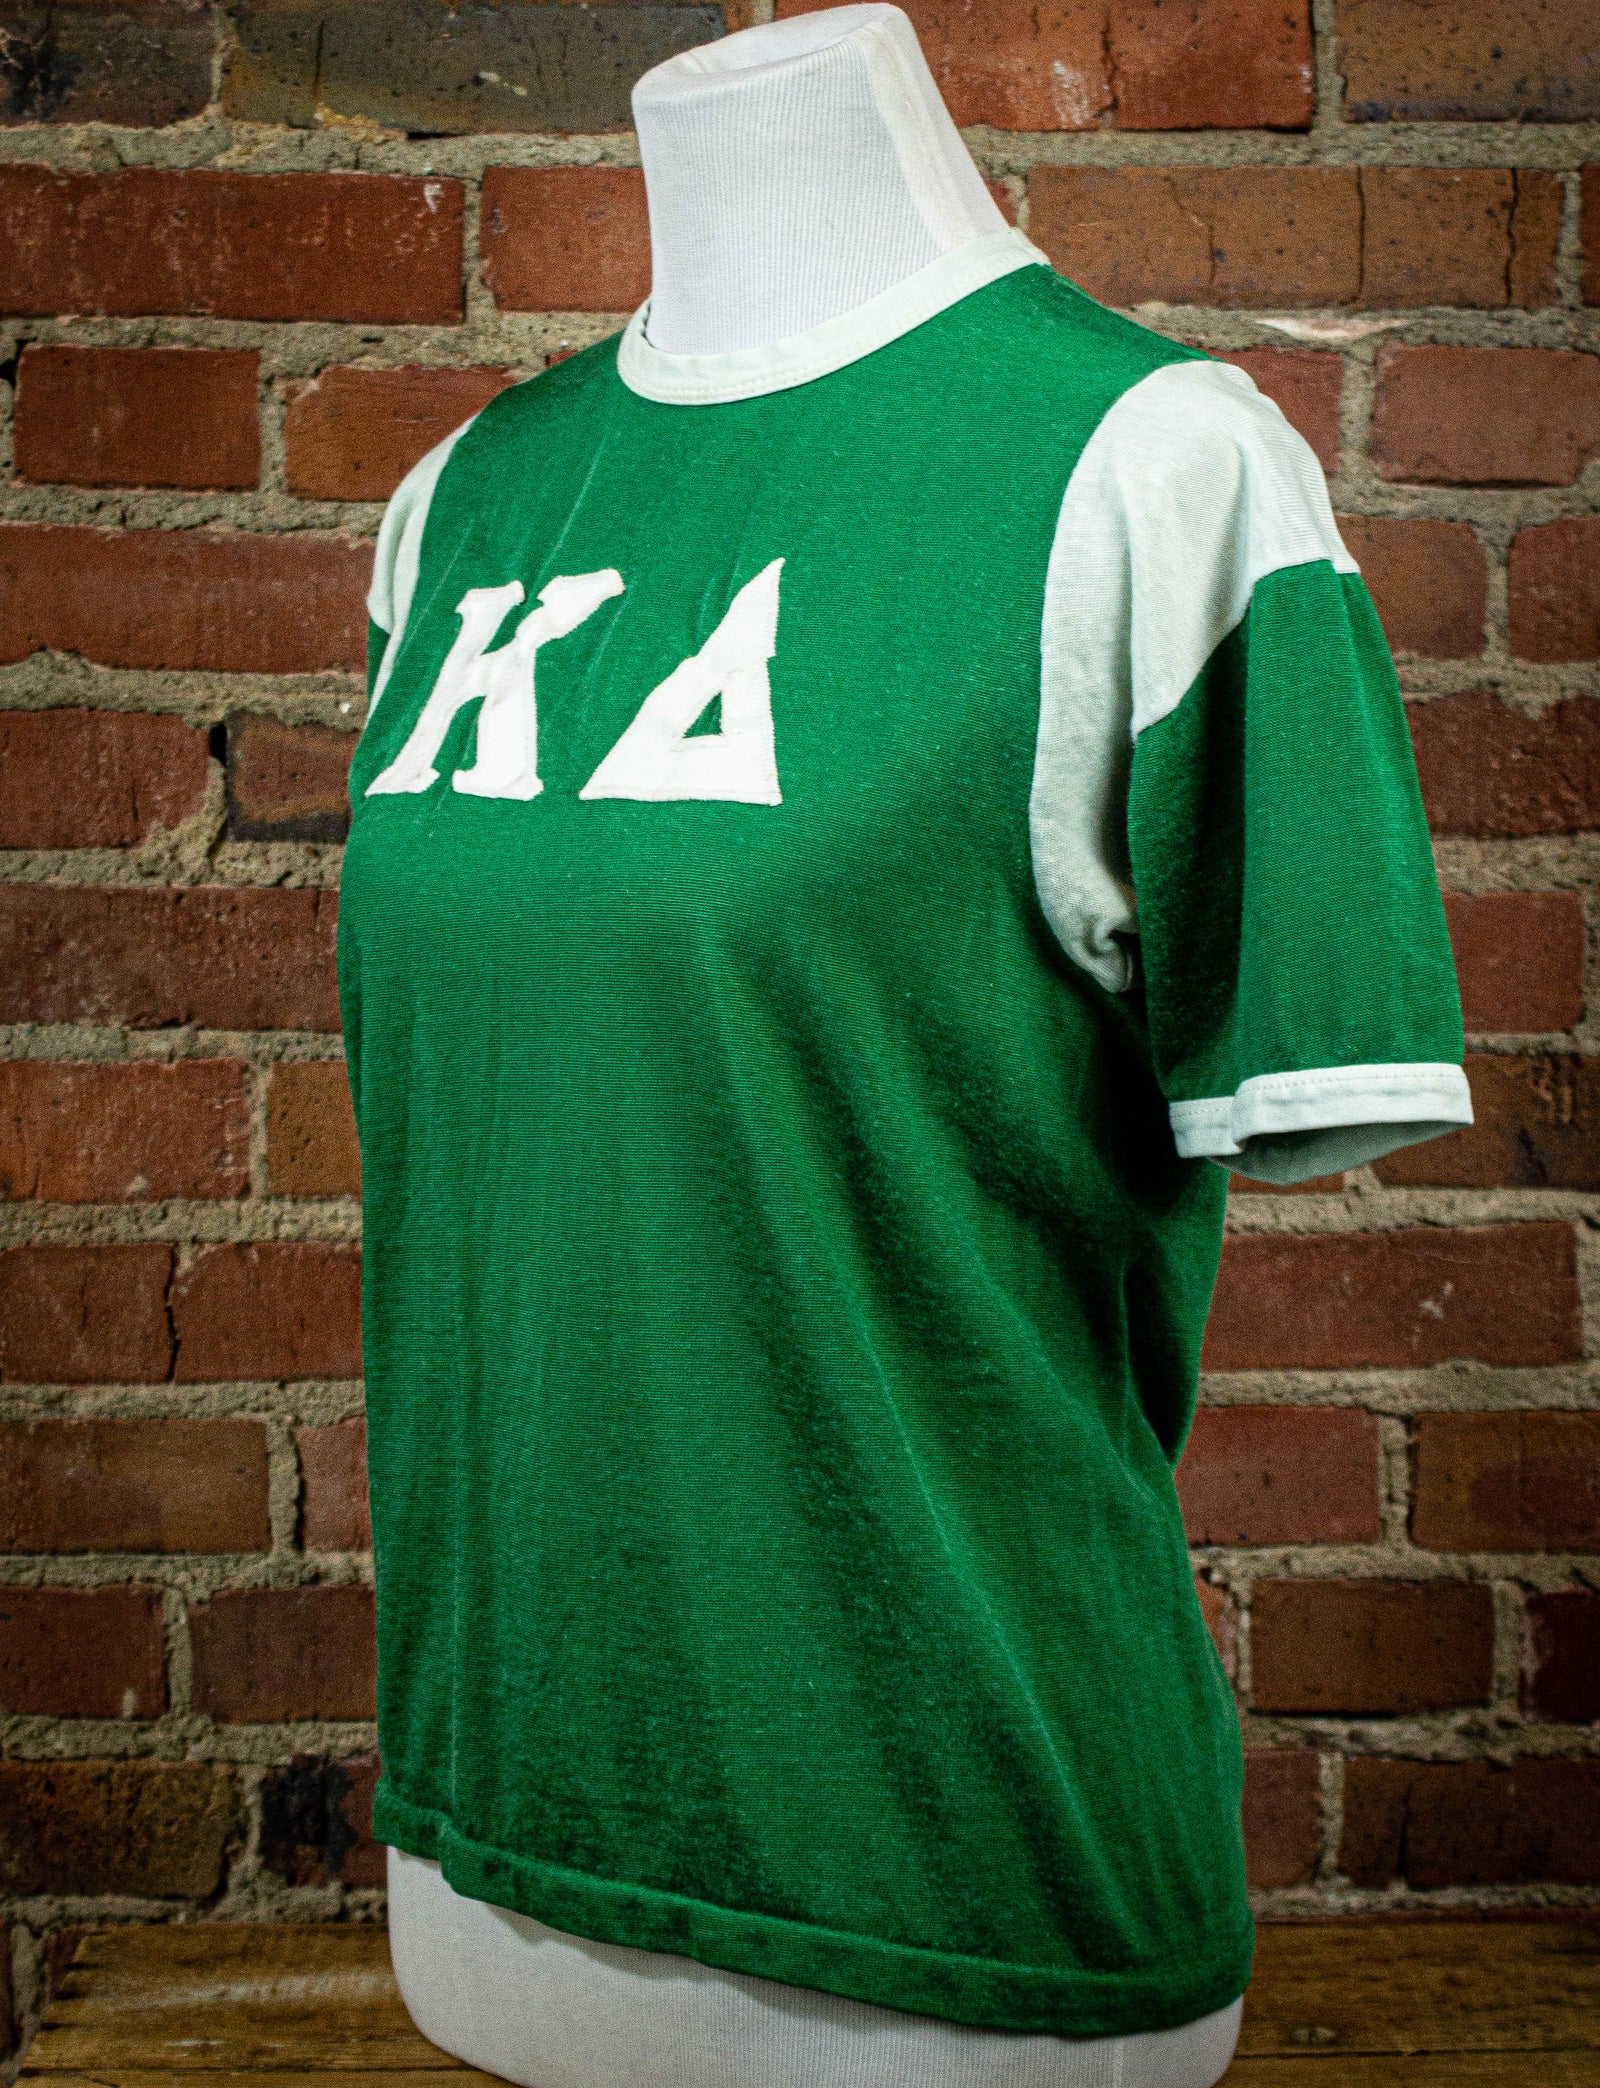 Vintage 50's Kappa Delta Sorority Green Jersey Ringer T Shirt S/M – Shag